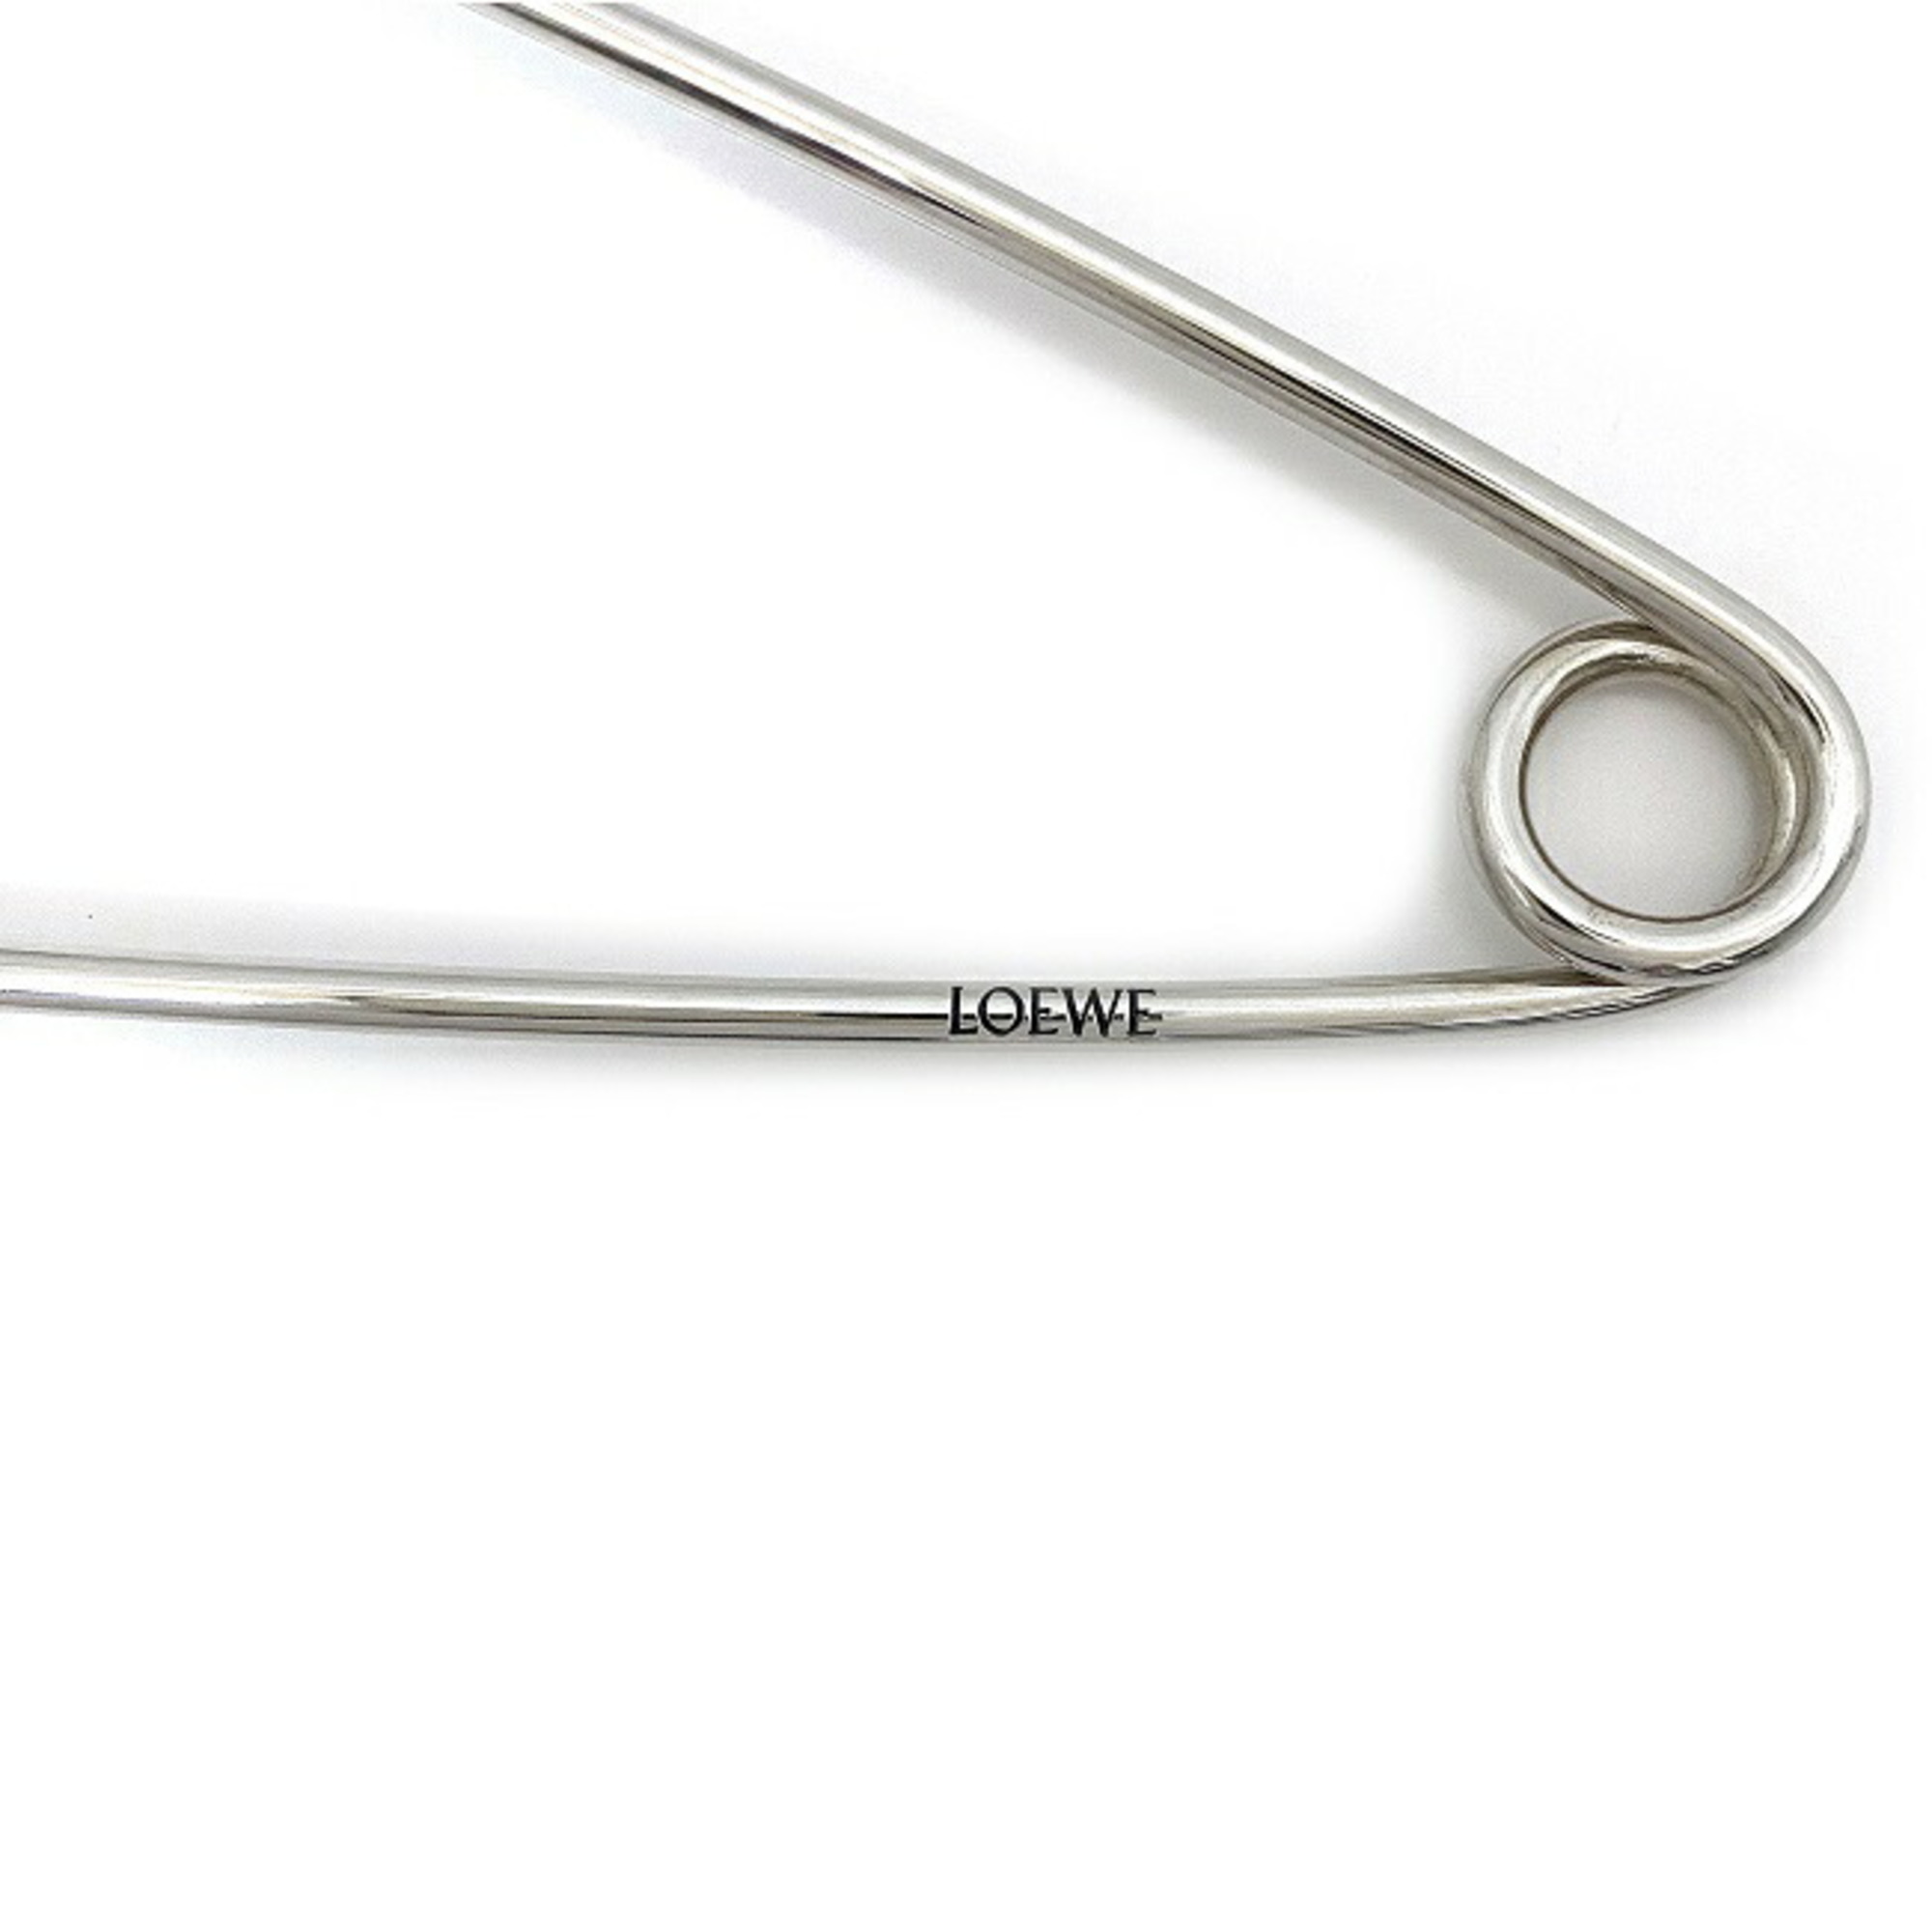 Loewe mechano pin brooch silver metal LOEWE scarf closure stole bag charm accent